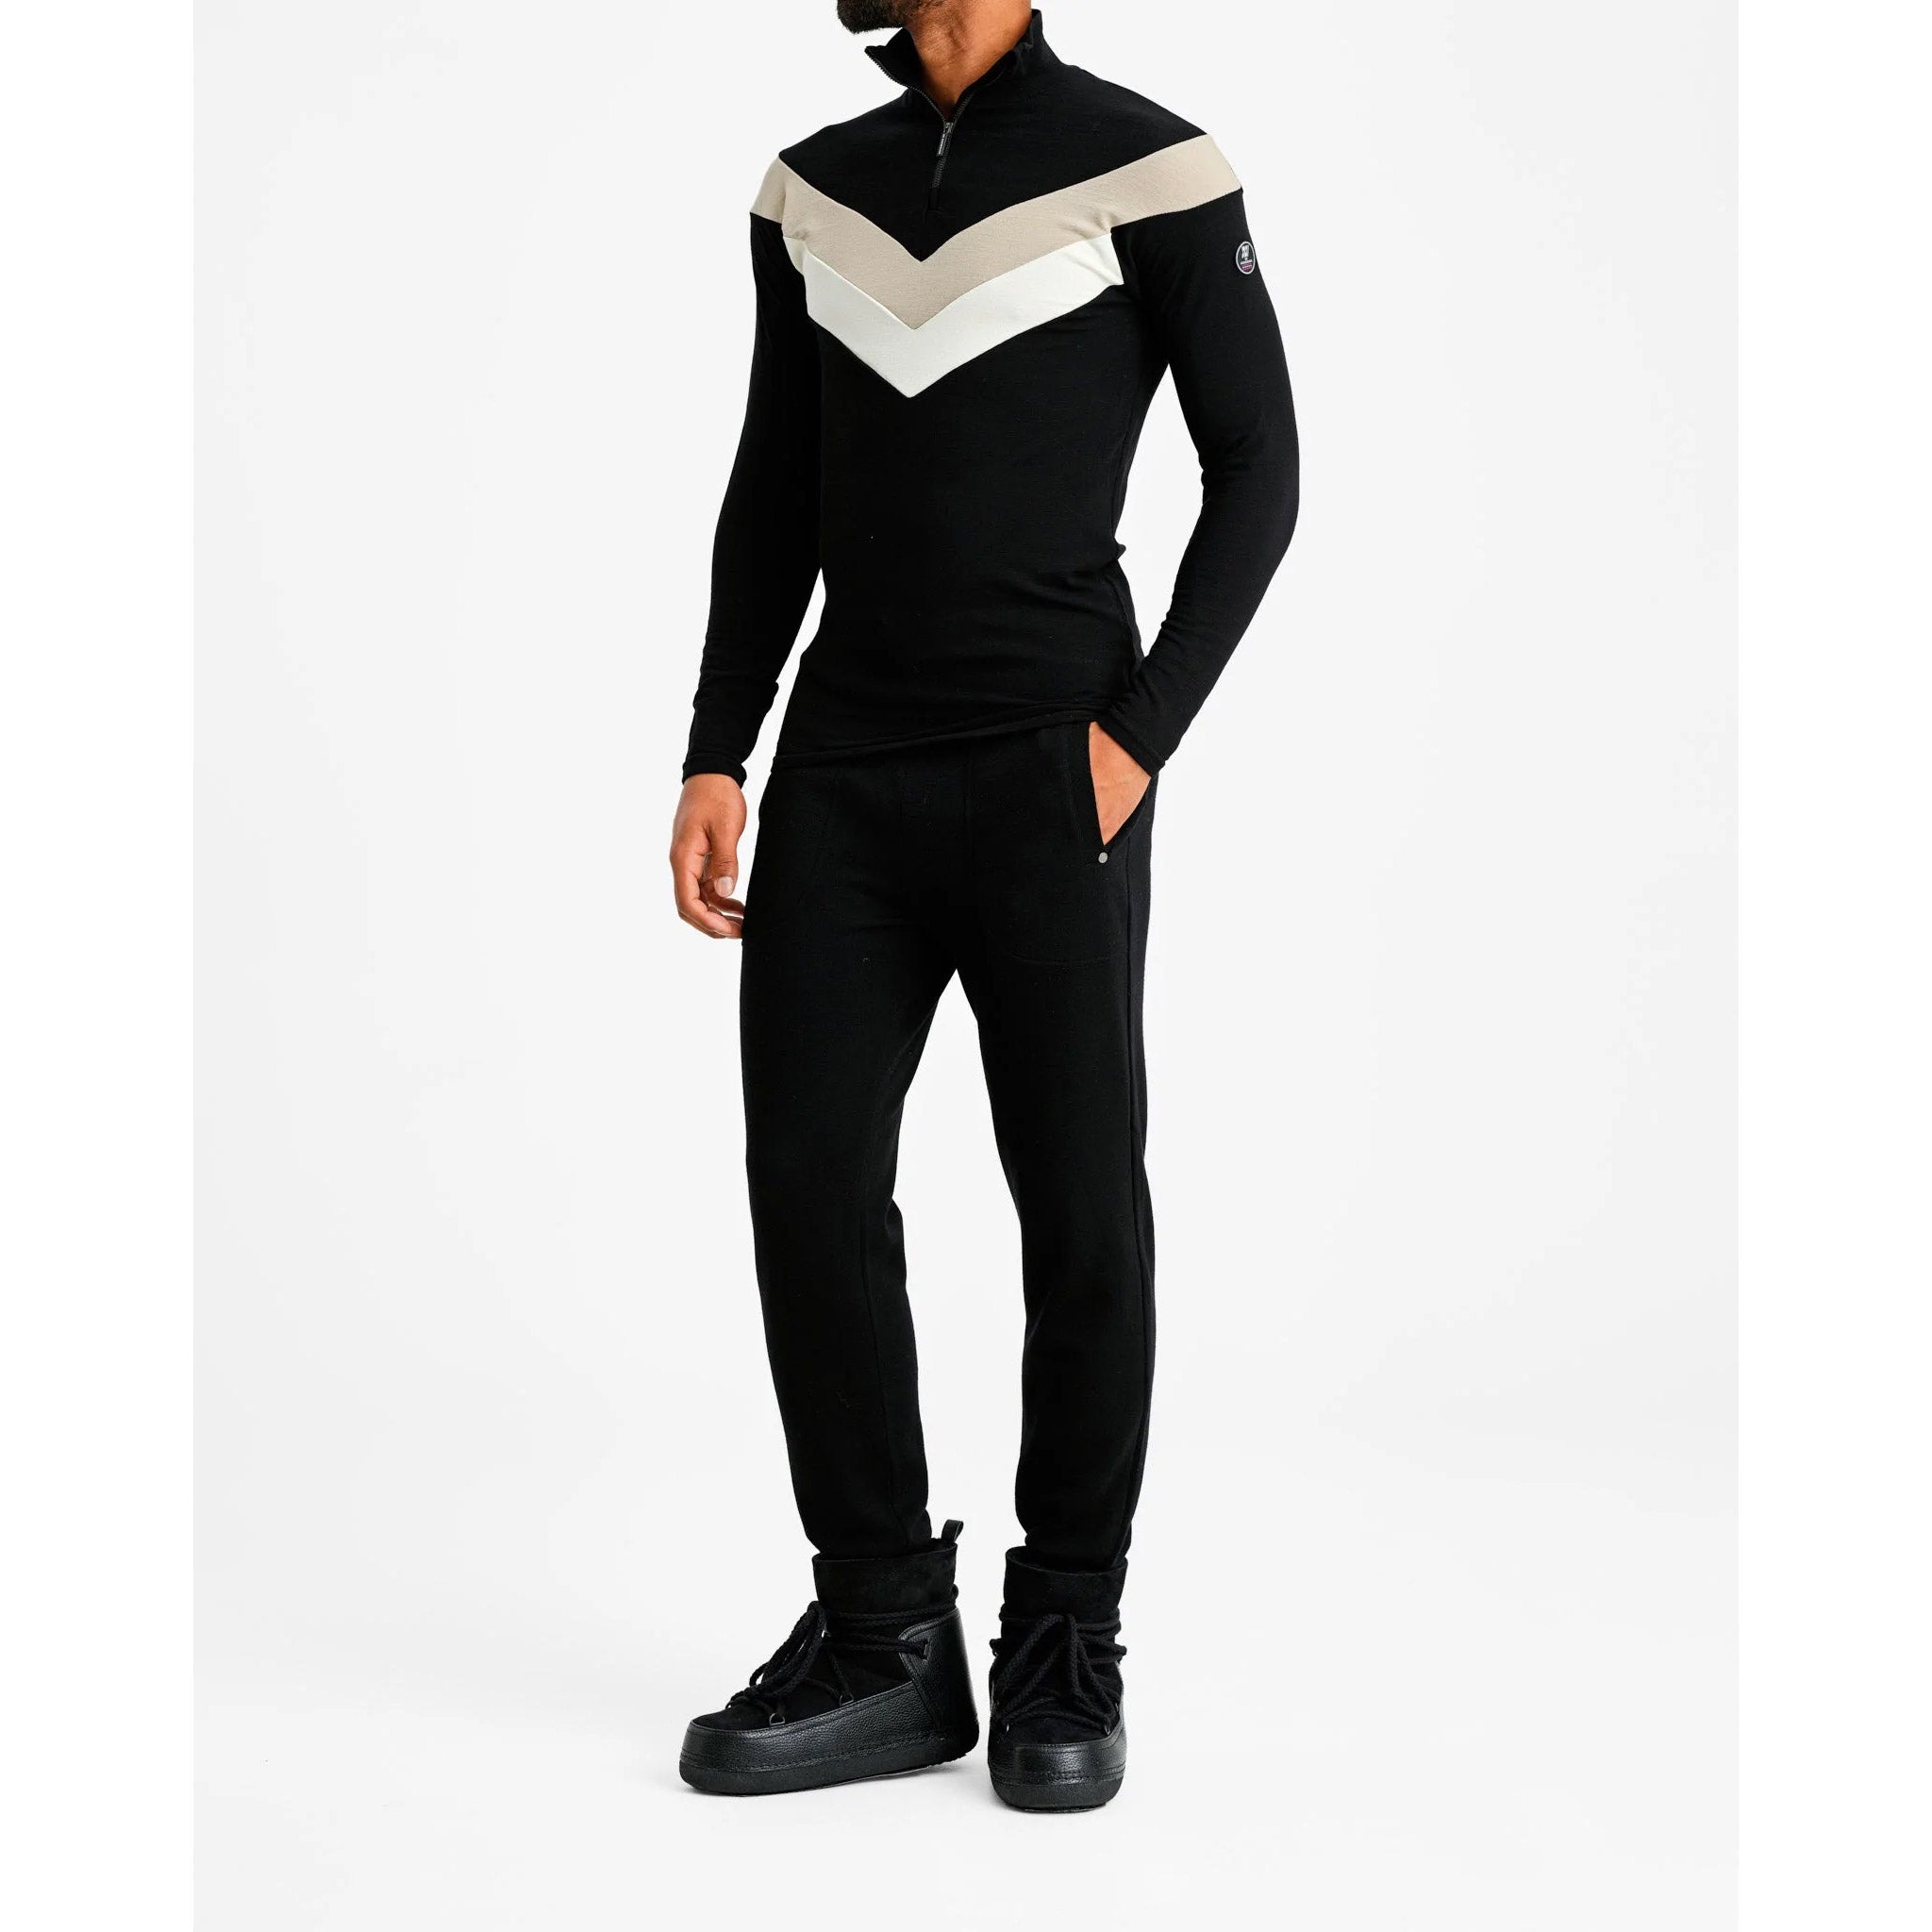 Voss Colblock Sweater in Black